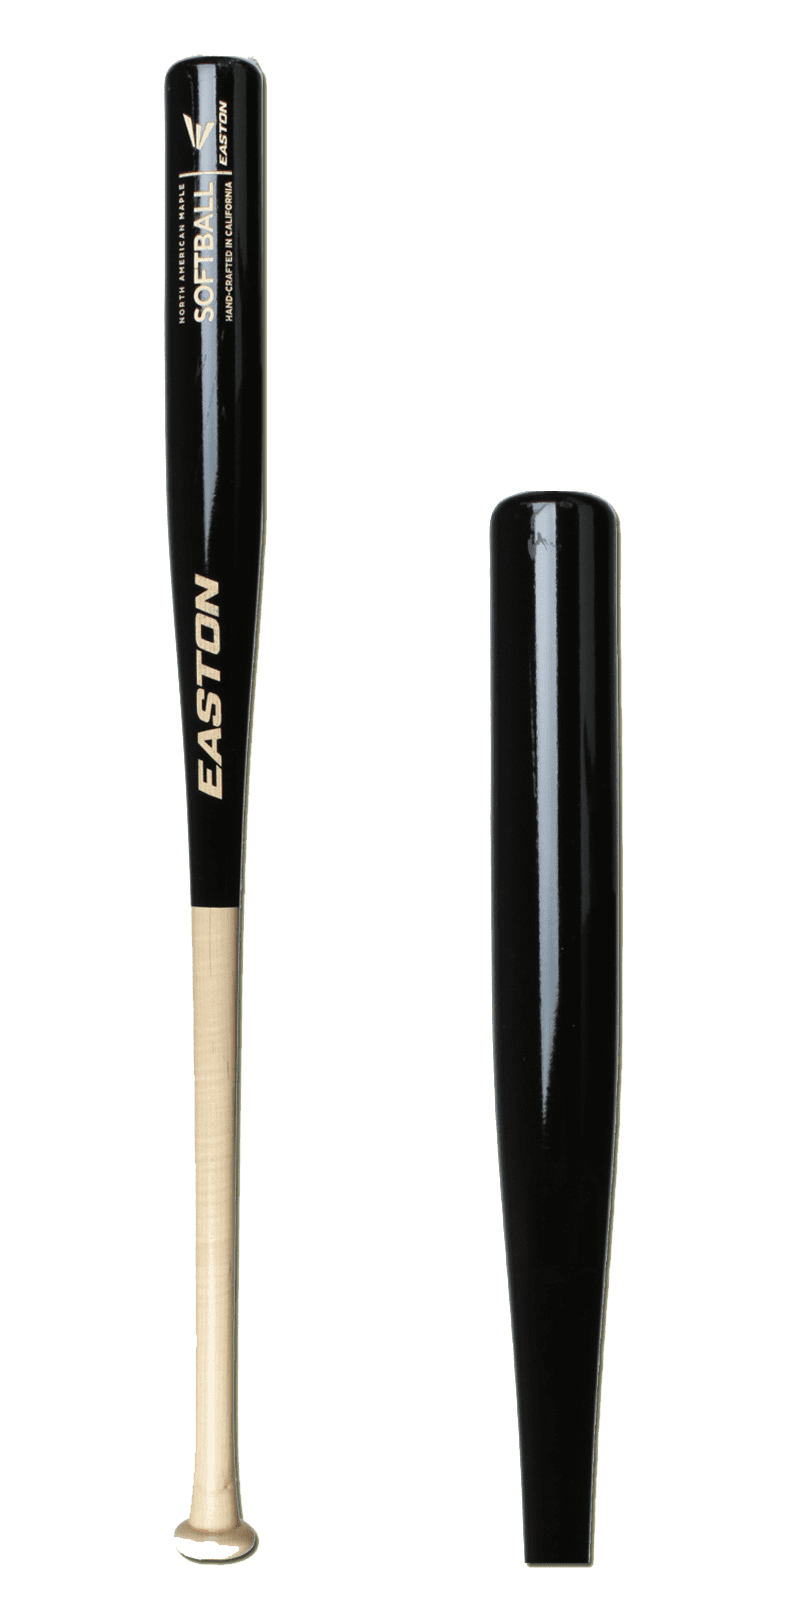 Premium Finish Maple BB34 Official Softball - Tater Baseball